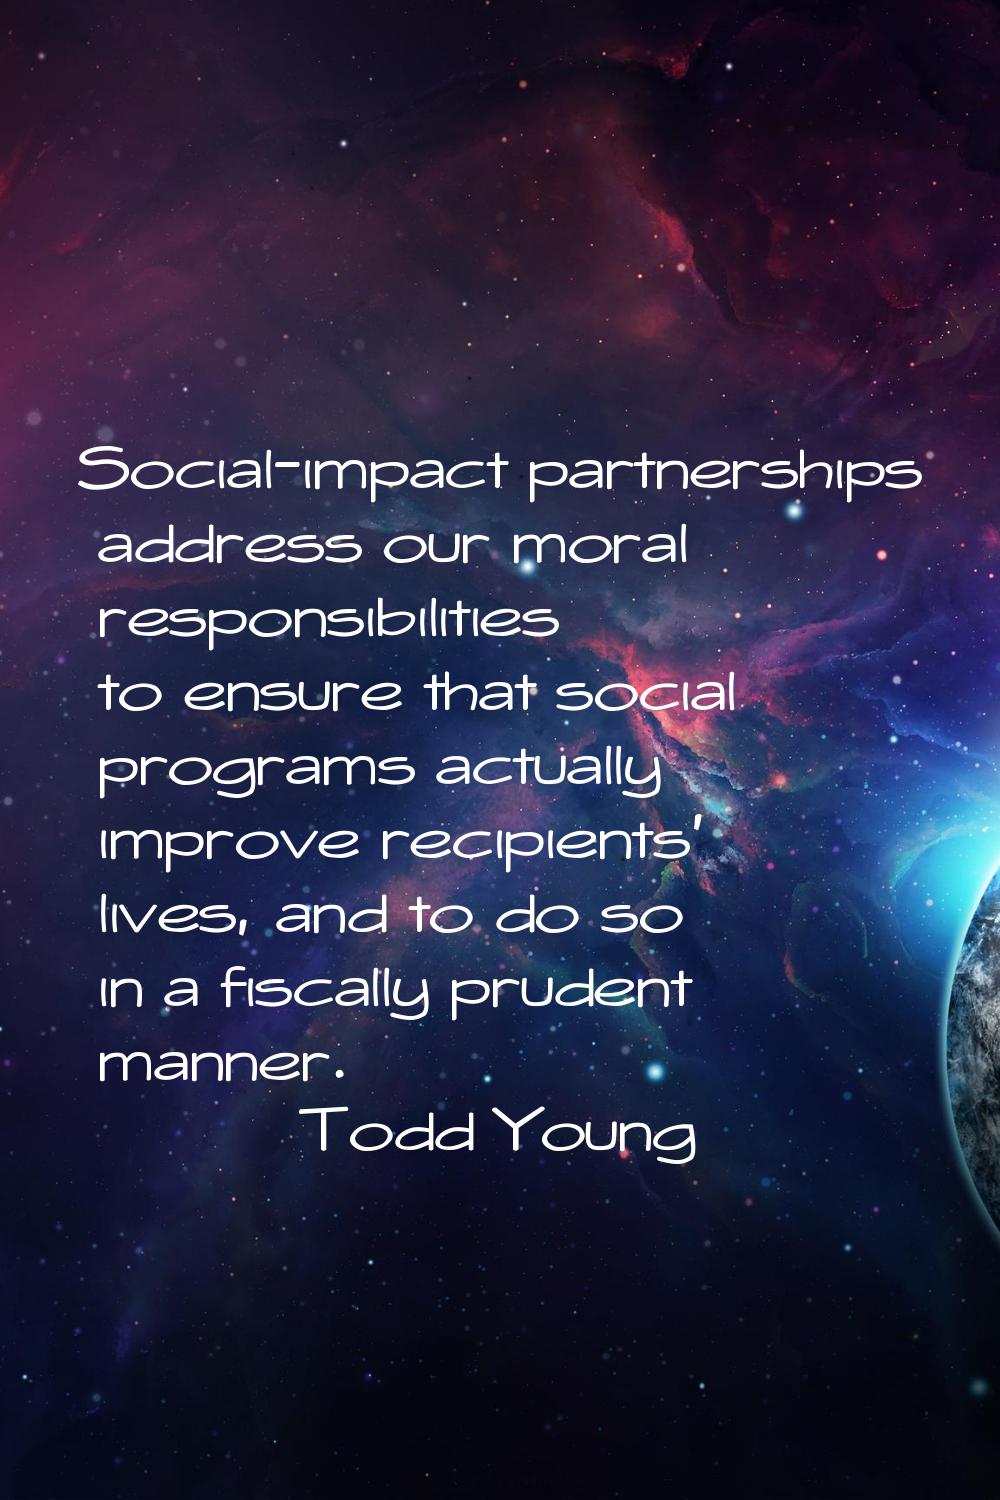 Social-impact partnerships address our moral responsibilities to ensure that social programs actual